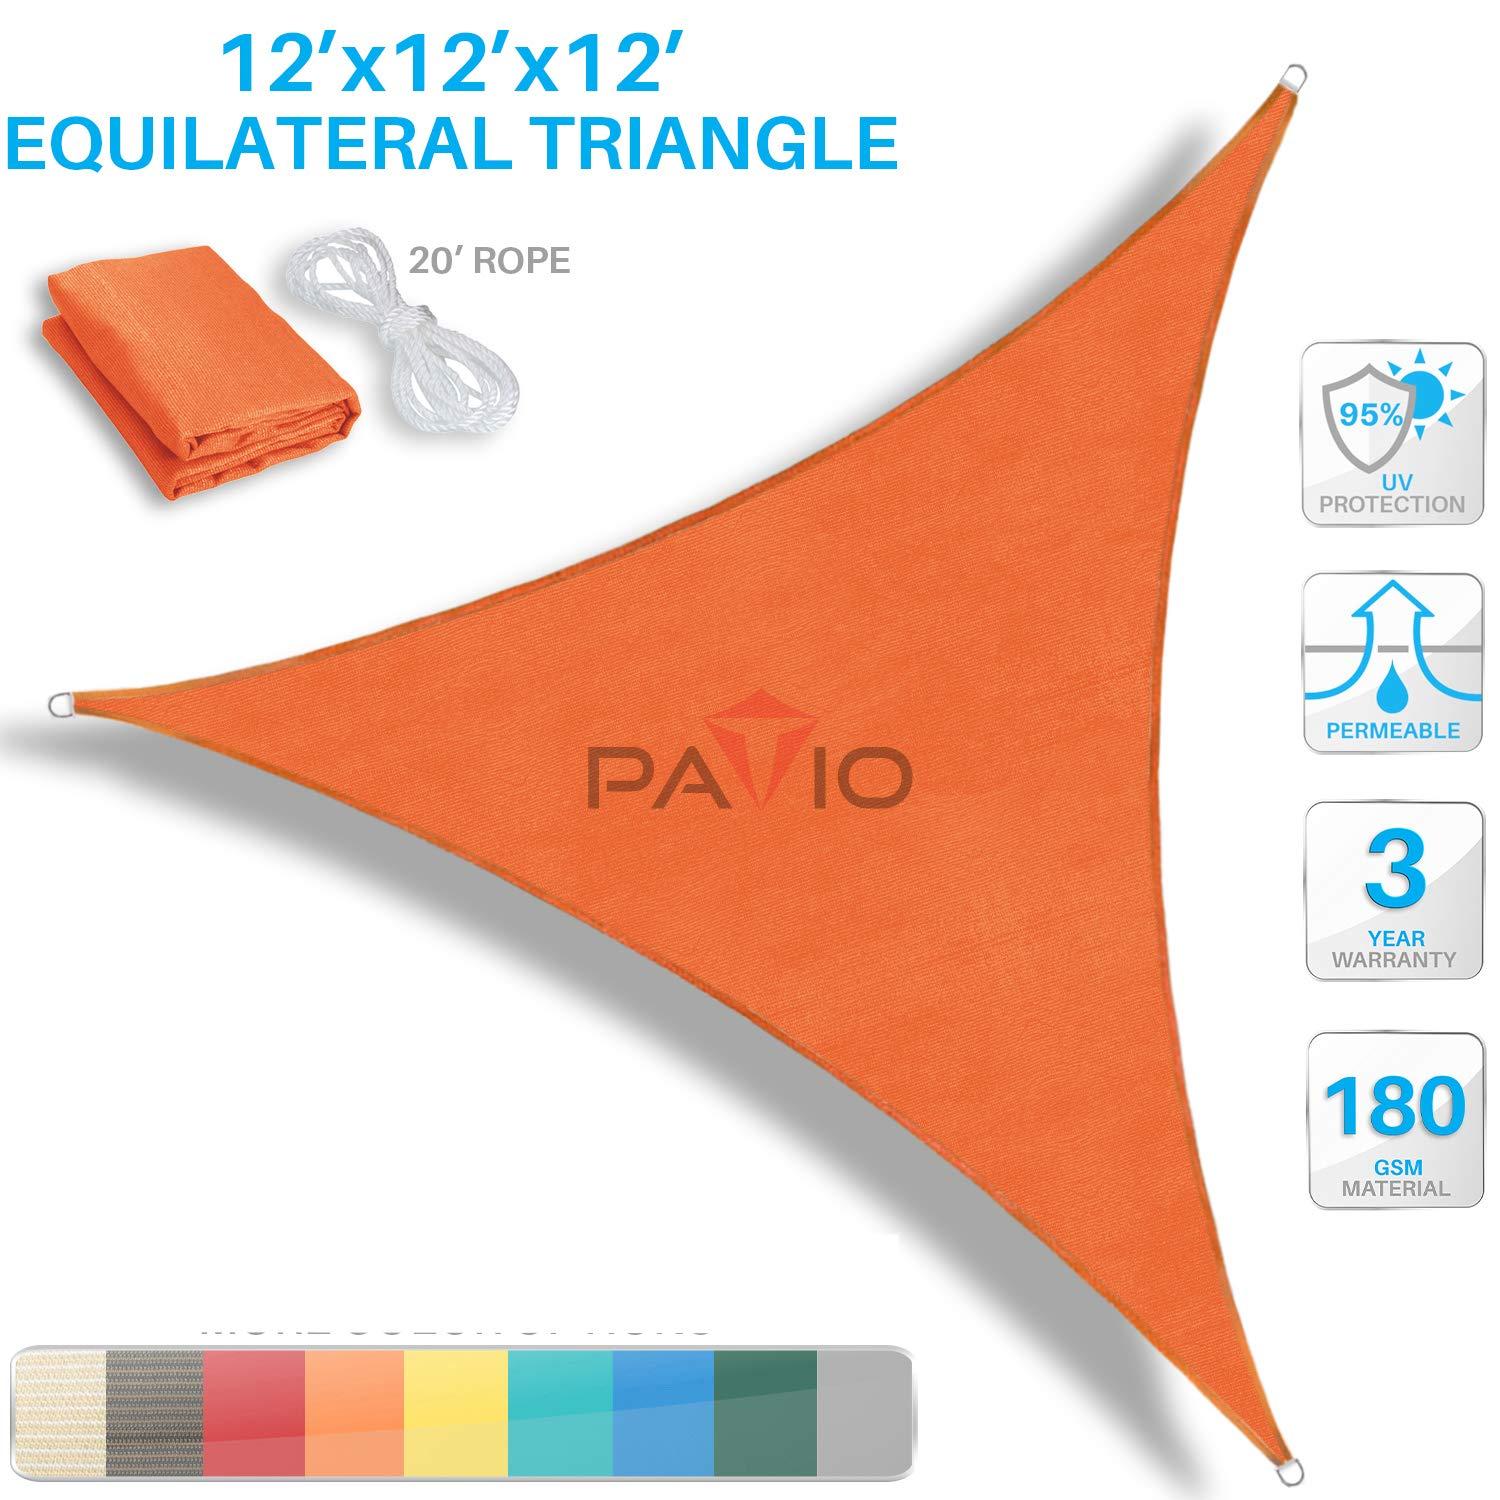 Patio Paradise Logo - Amazon.com : Patio Paradise 12' x12'x 12' Orange Sun Shade Sail